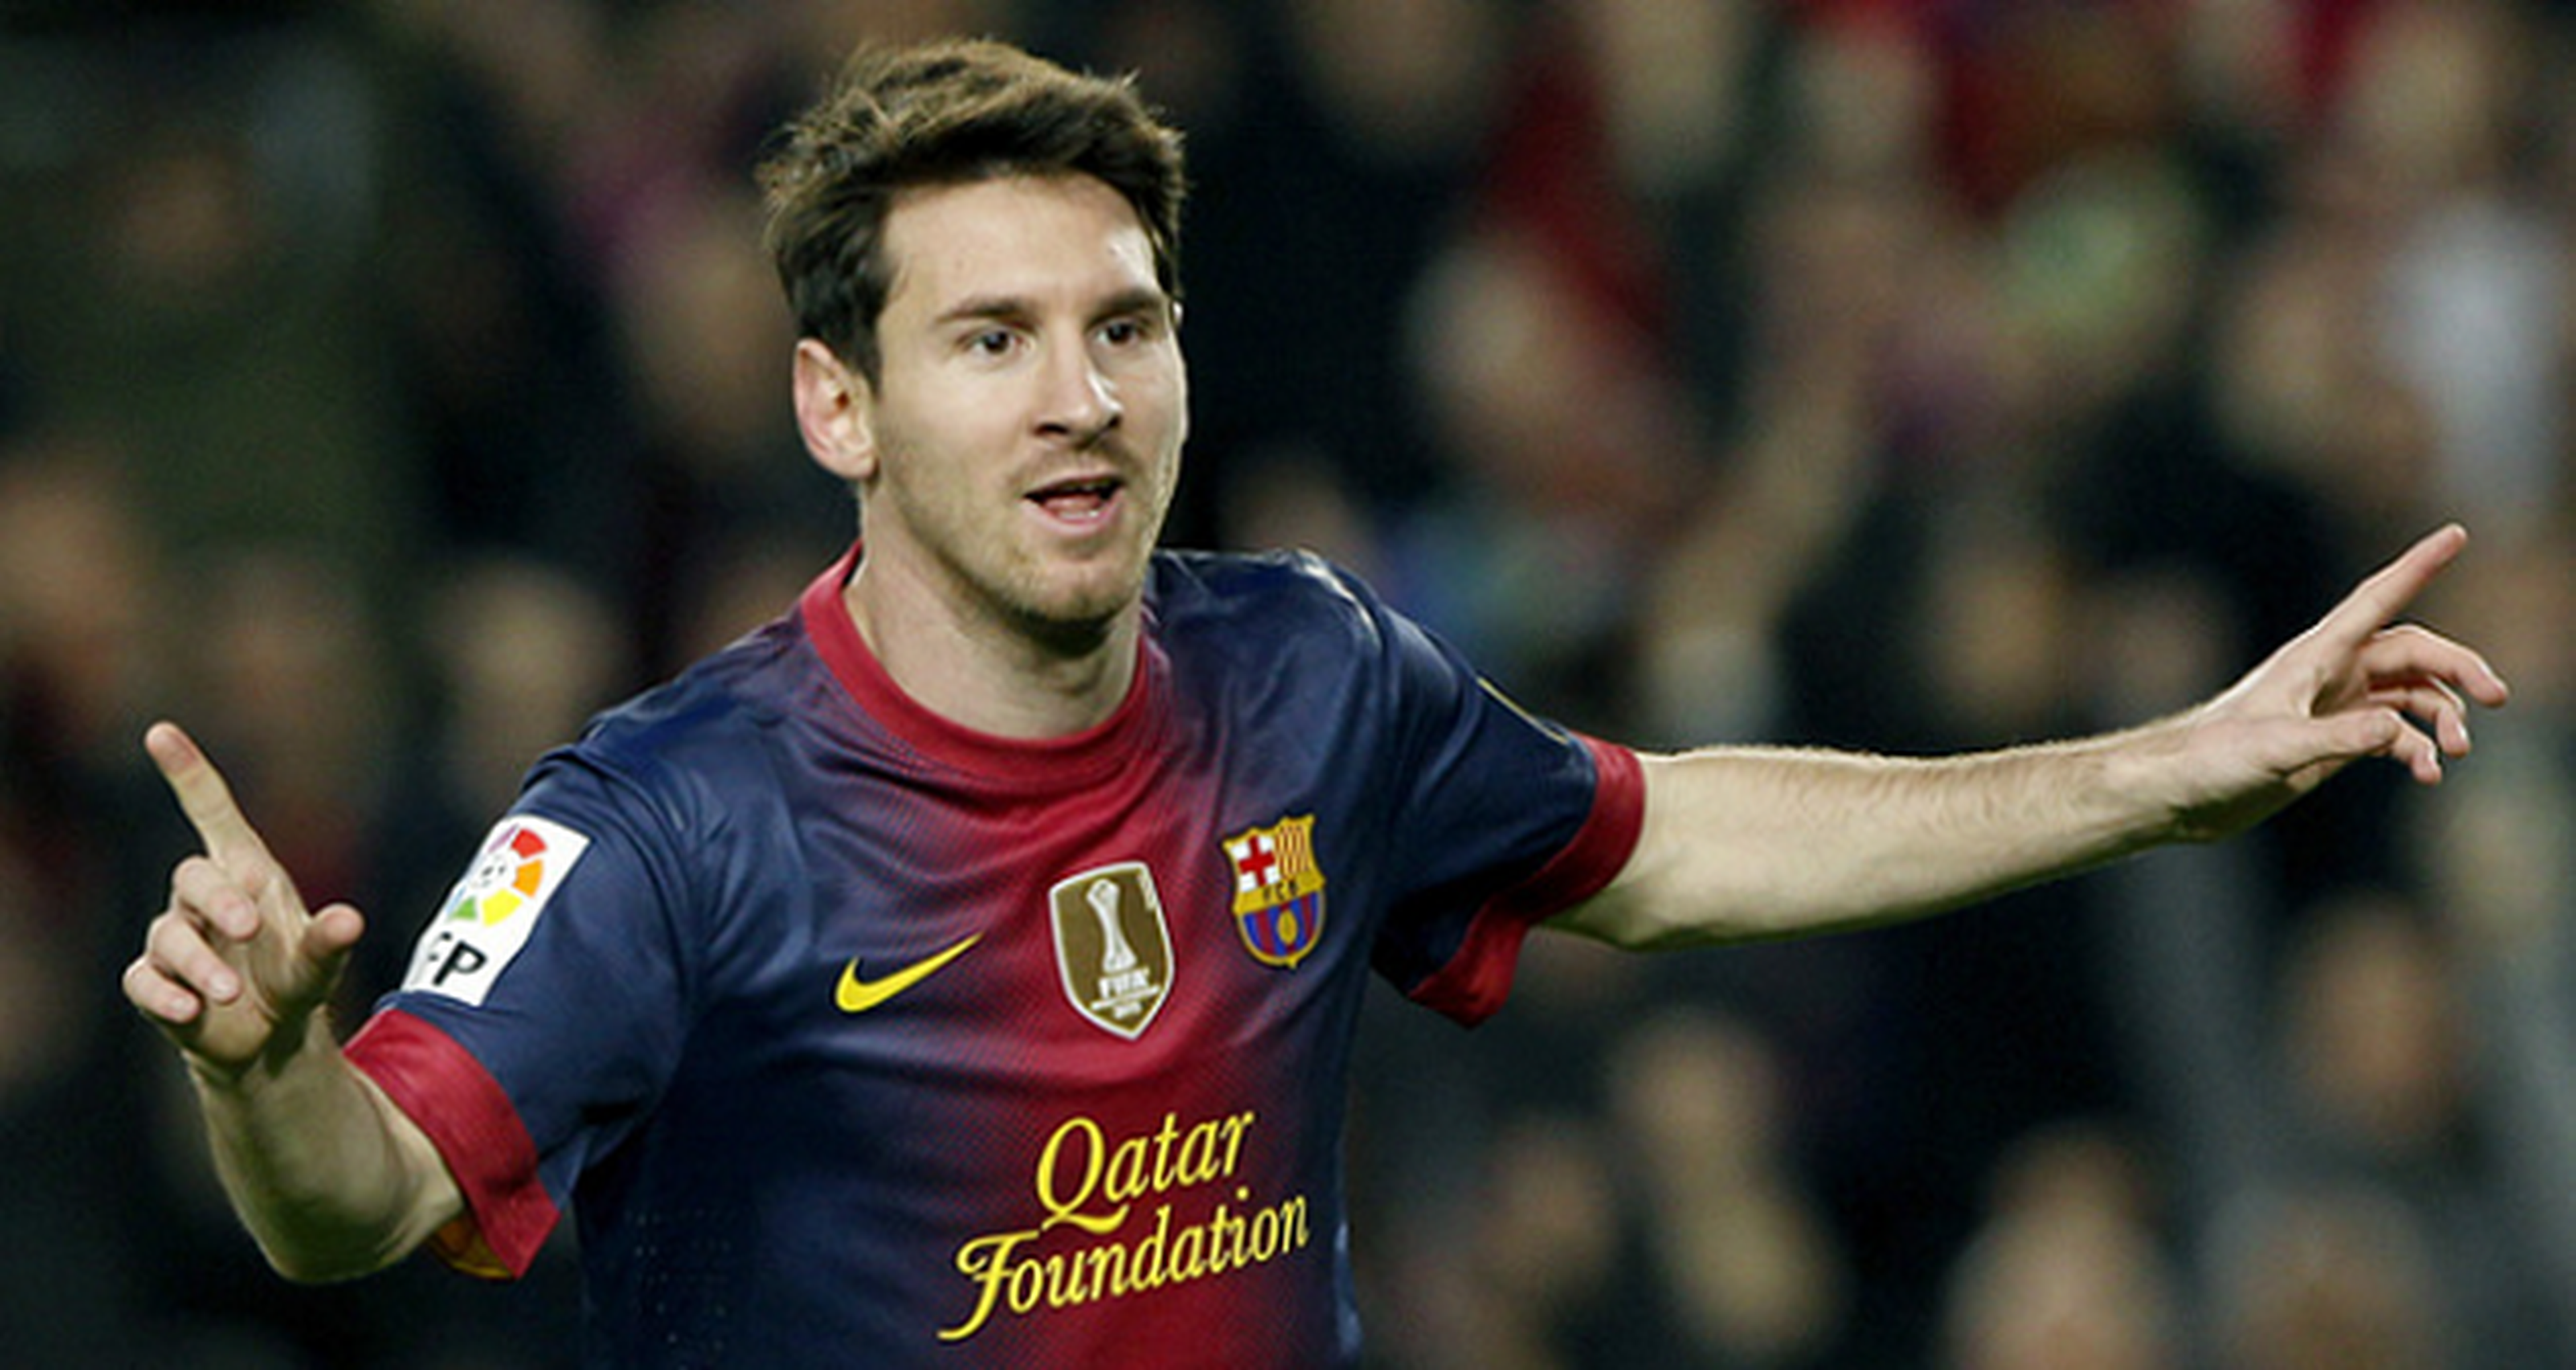 Epic Pictures quiere realizar un biopic sobre Messi